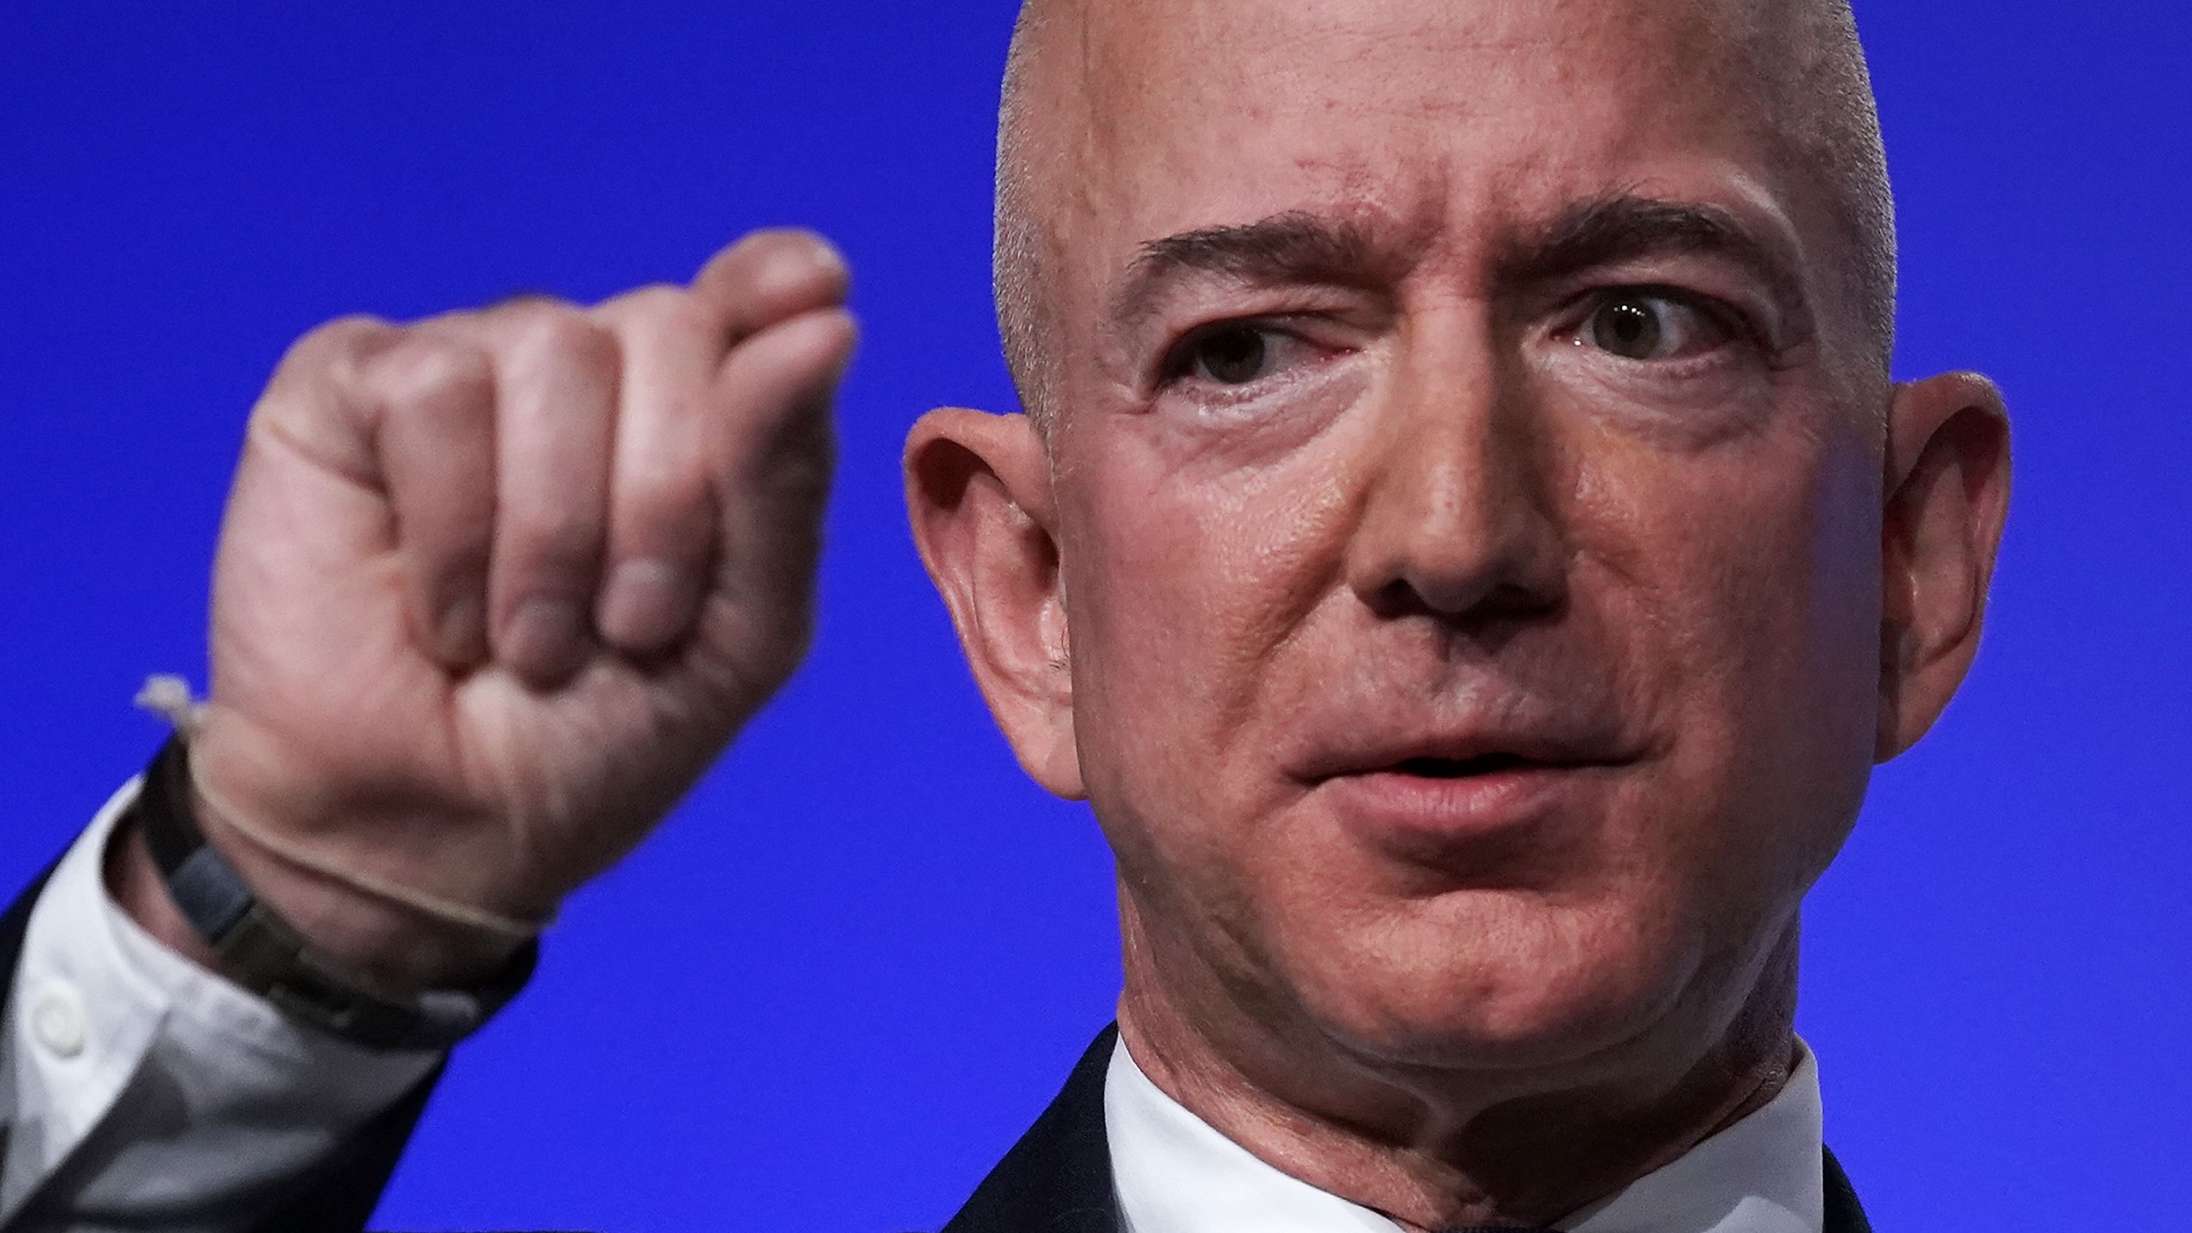 Nu kan du købe Jeff Bezos’ penis-lignende raket i miniformat